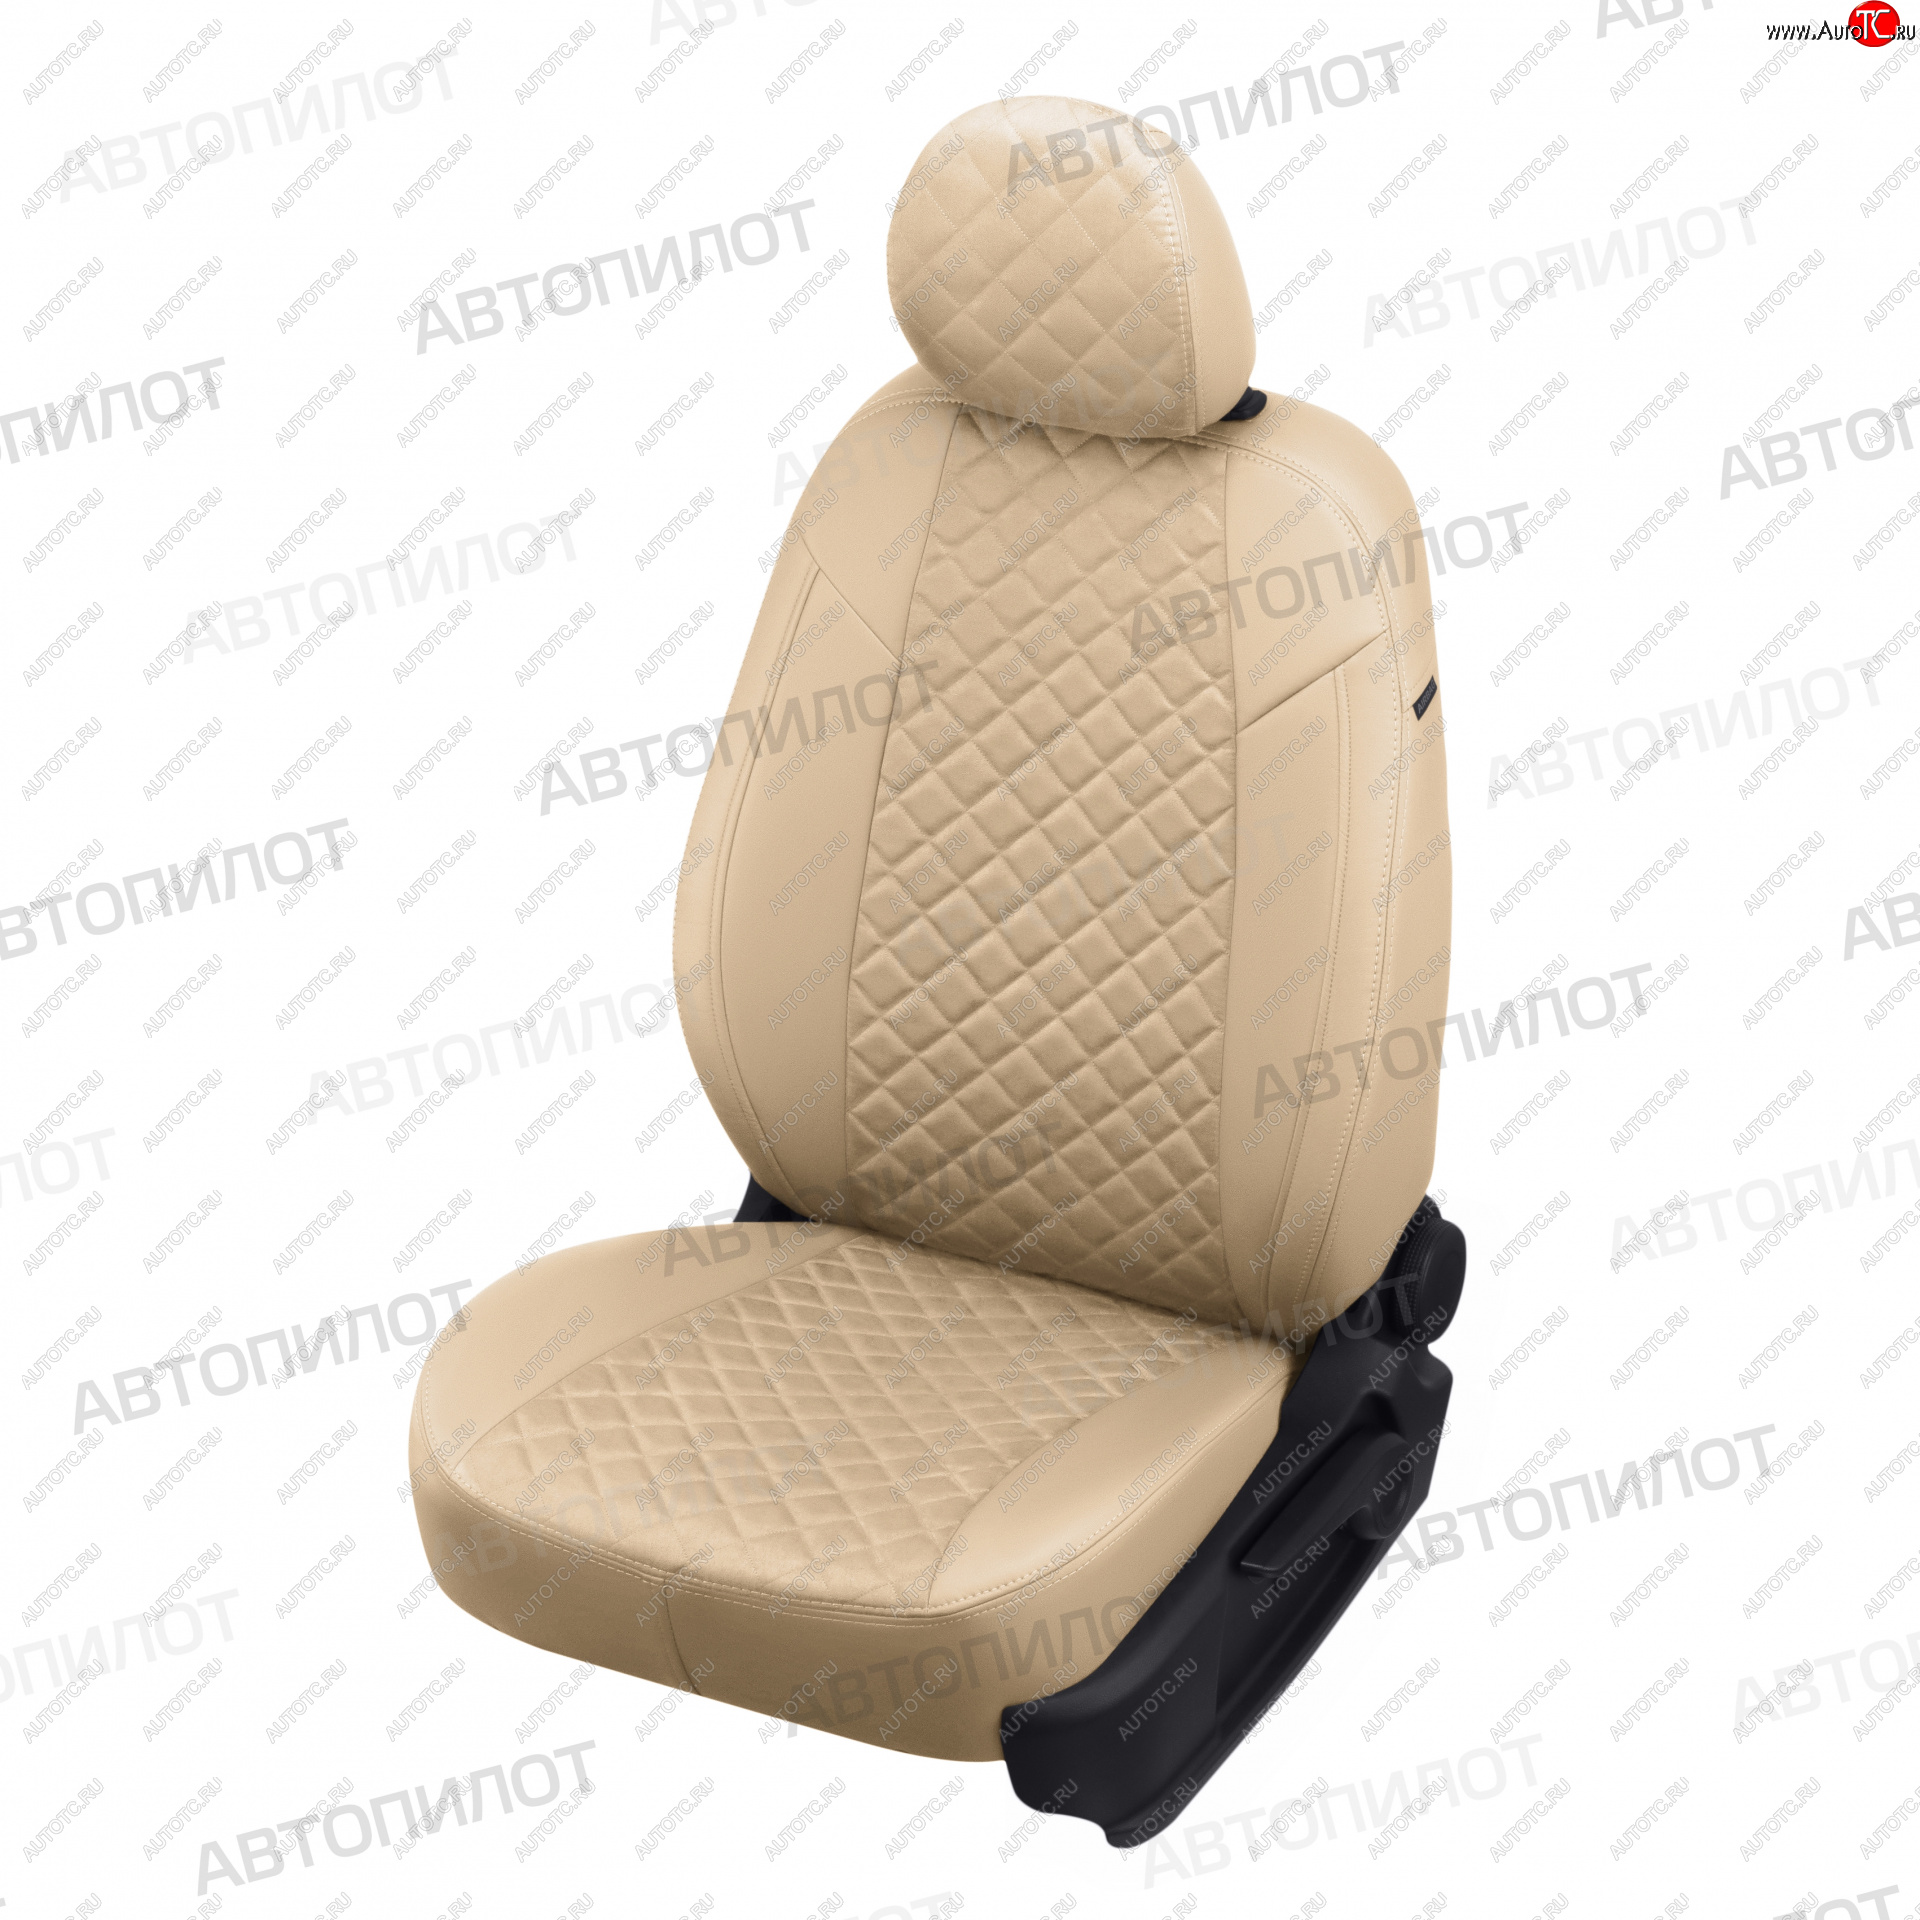 21 599 р. Чехлы сидений (9 мест, экокожа/алькантара) Автопилот Ромб  Ford Transit  4 (2014-2024) (бежевый)